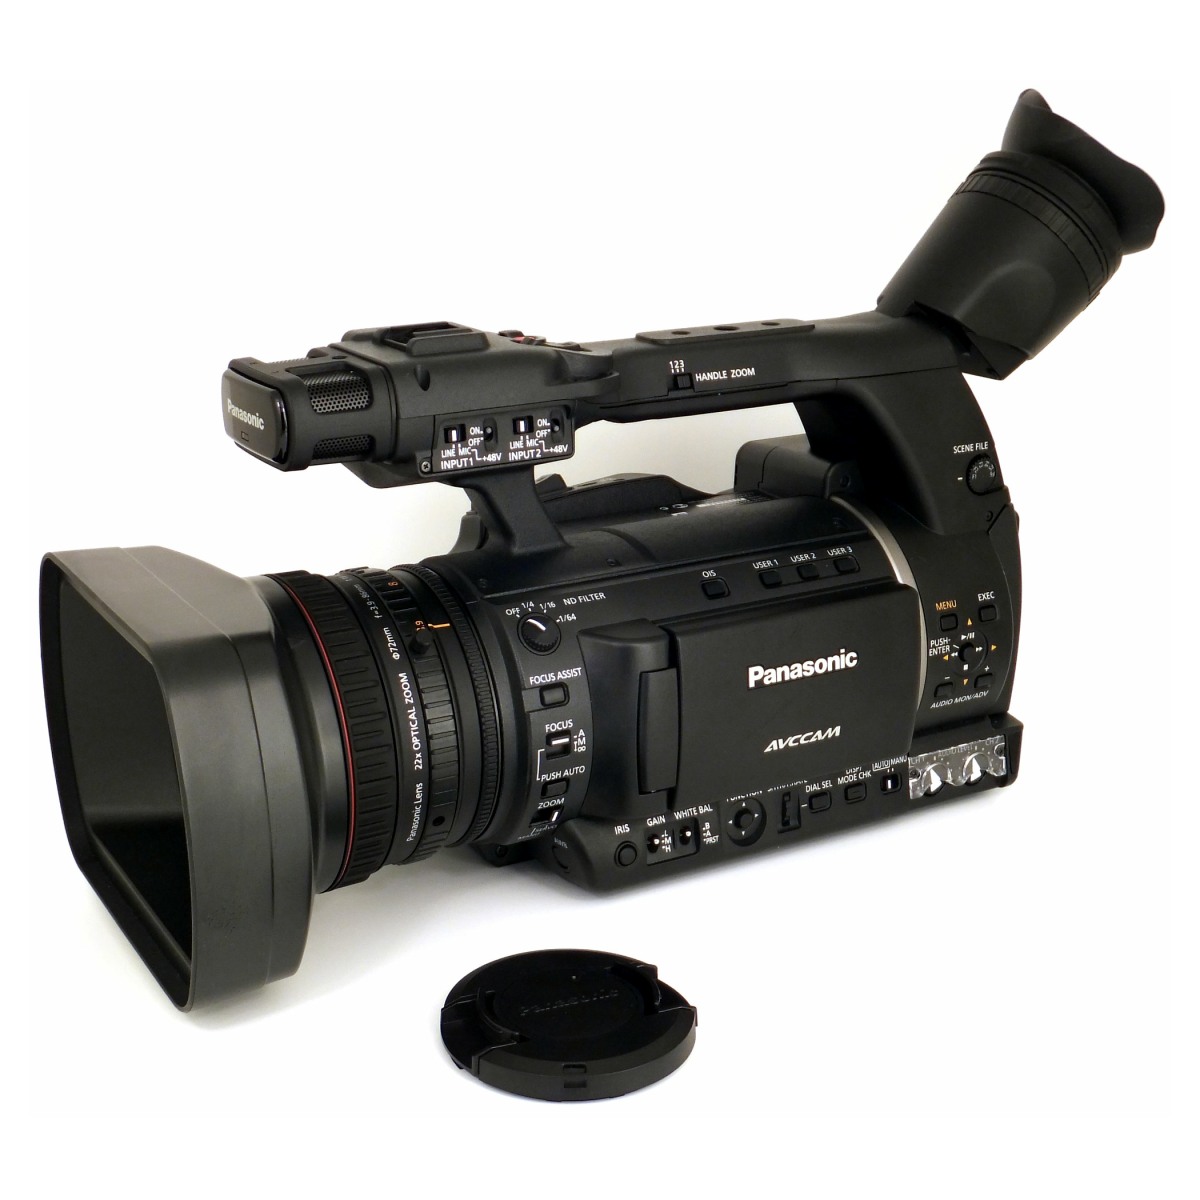 PanasonicAG AC160AE AVCCAM HD Video Camera